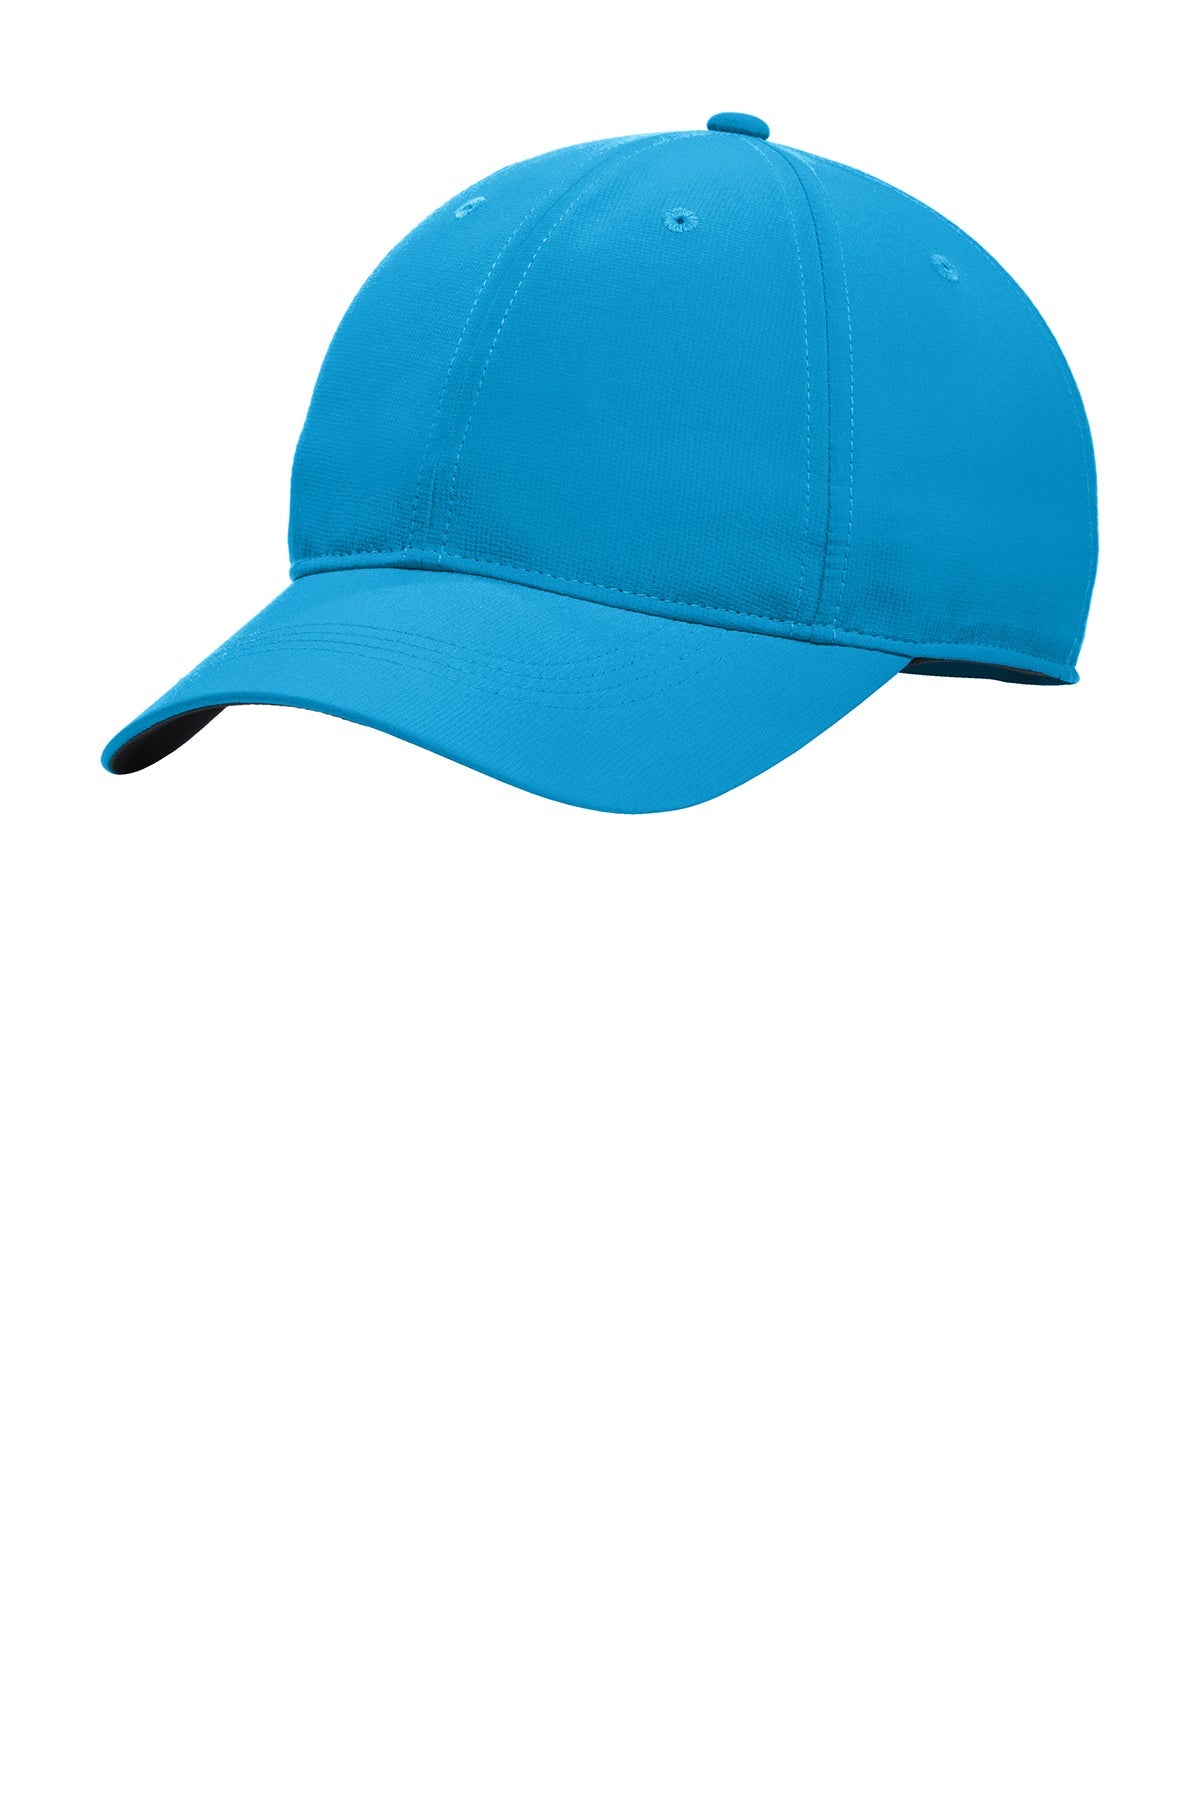 Nike Dri-FIT Tech Custom Caps, Photo Blue